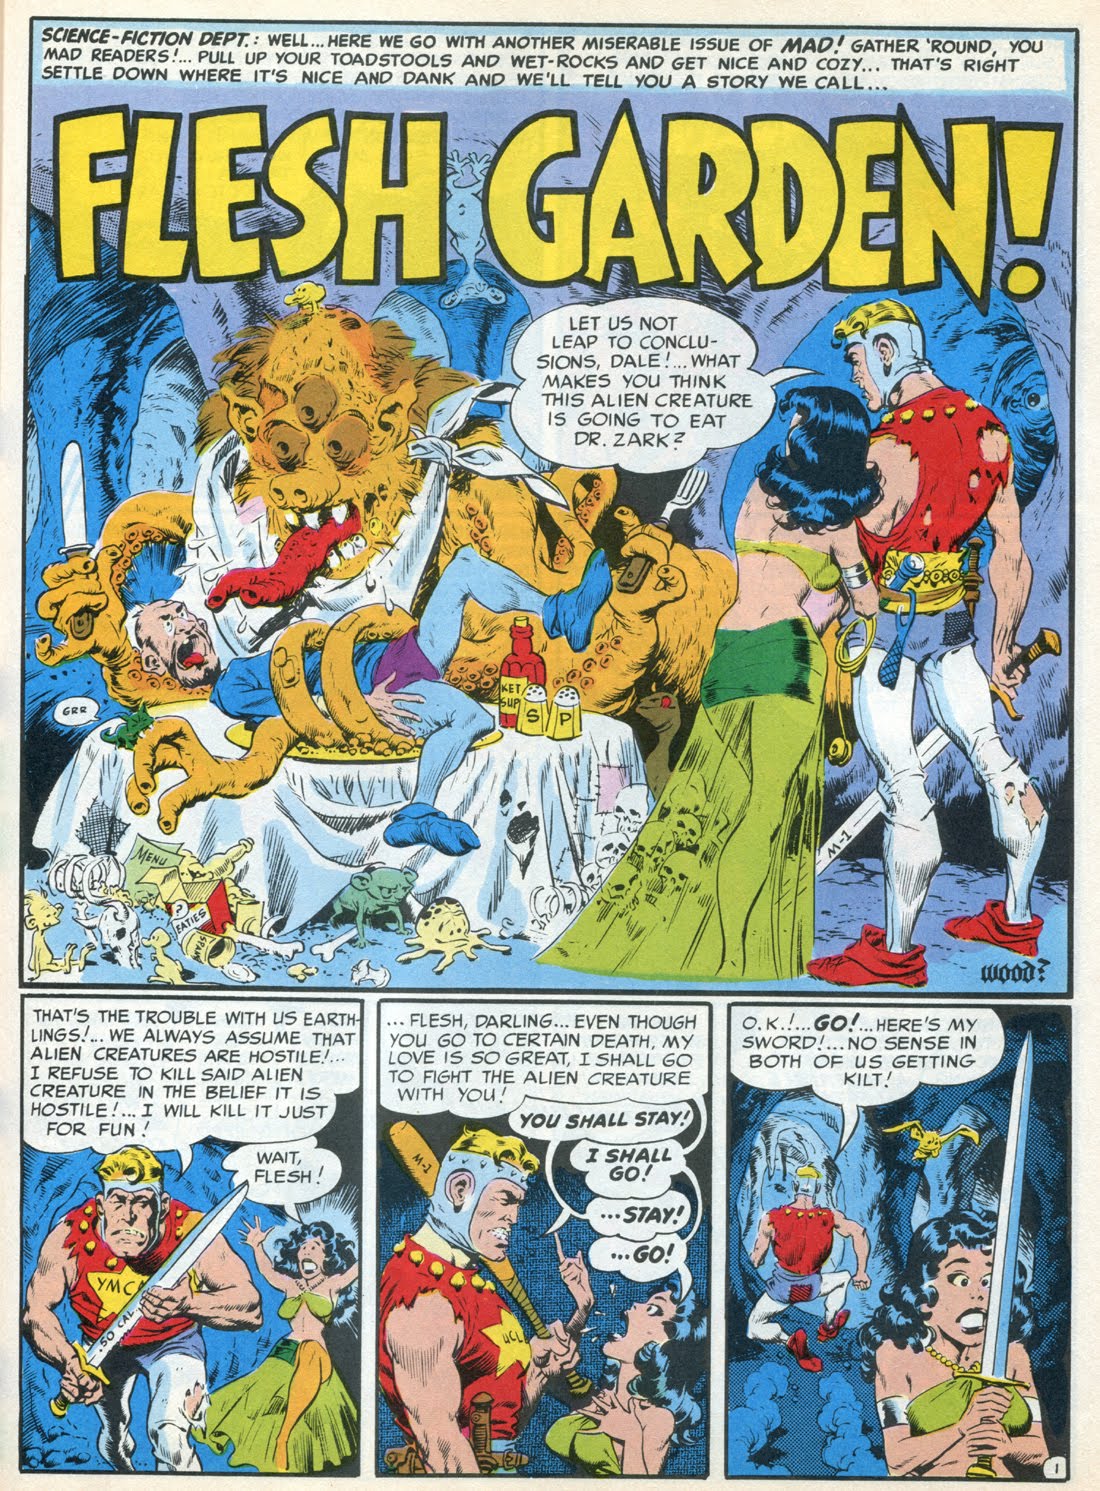 Inside Jeff Overturf's Head: Flesh Garden! - Wally Wood - Mad Mondays!